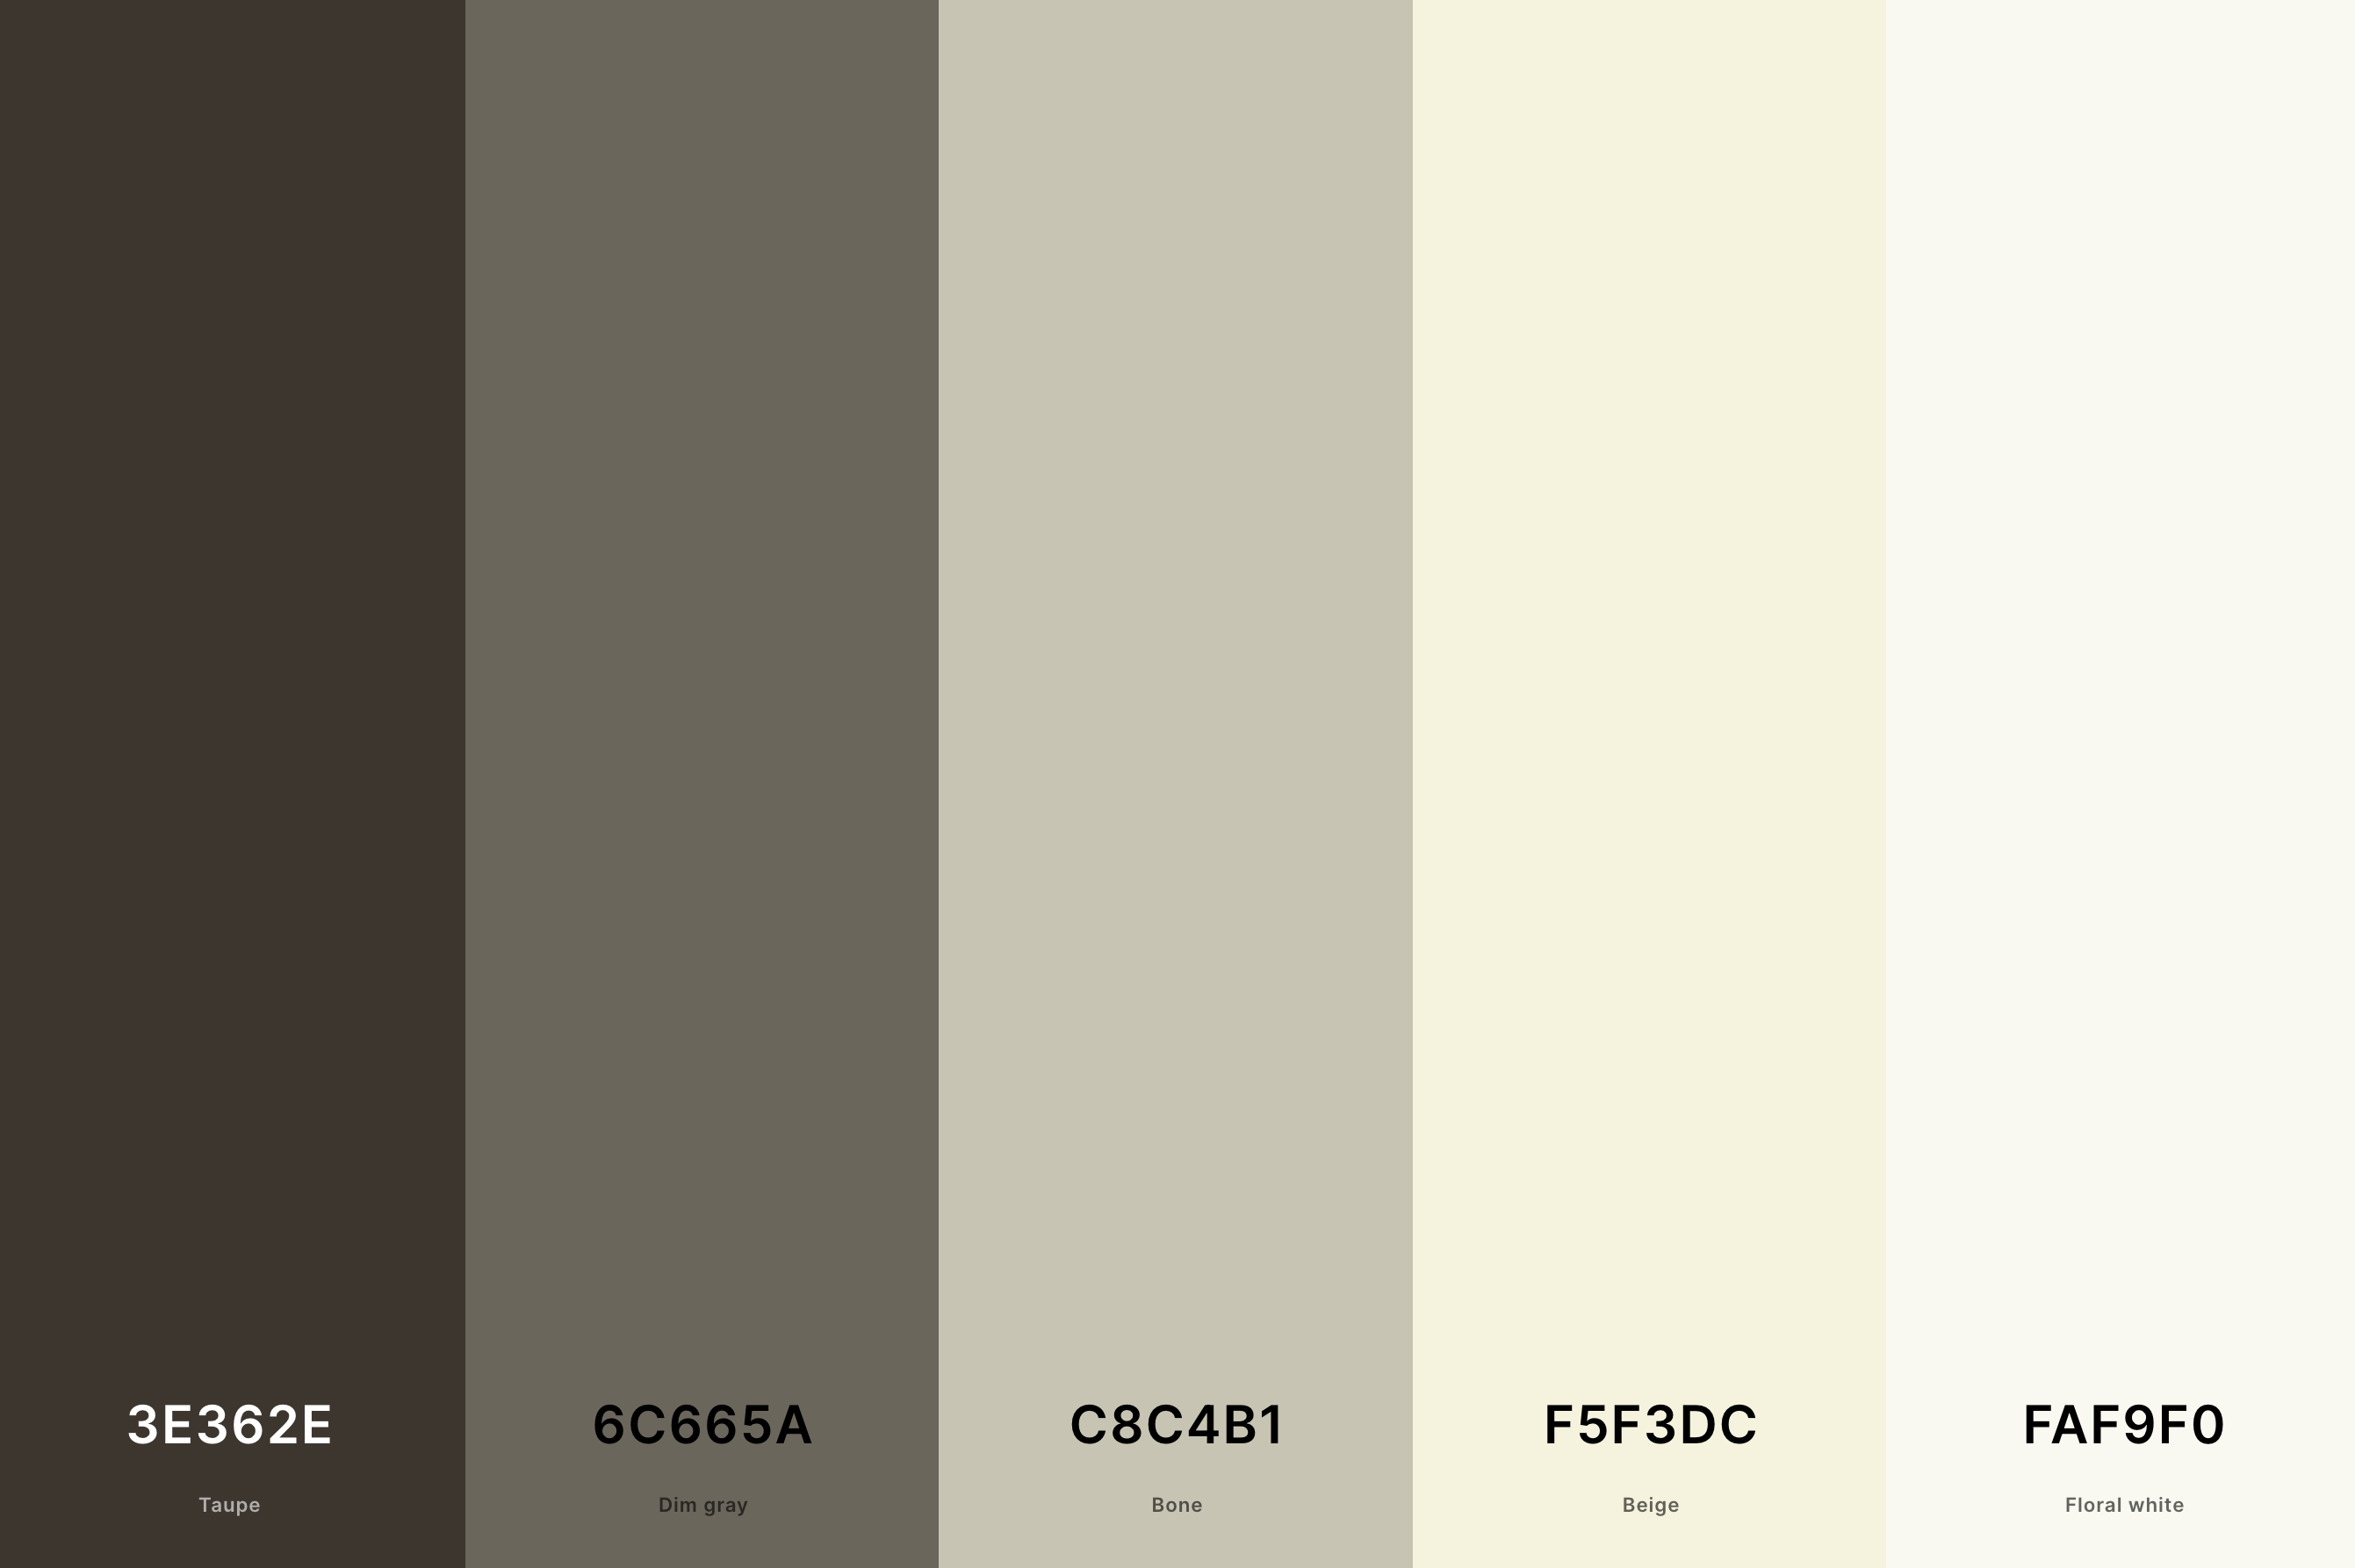 11. Aesthetic Beige Color Palette Color Palette with Taupe (Hex #3E362E) + Dim Gray (Hex #6C665A) + Bone (Hex #C8C4B1) + Beige (Hex #F5F3DC) + Floral White (Hex #FAF9F0) Color Palette with Hex Codes